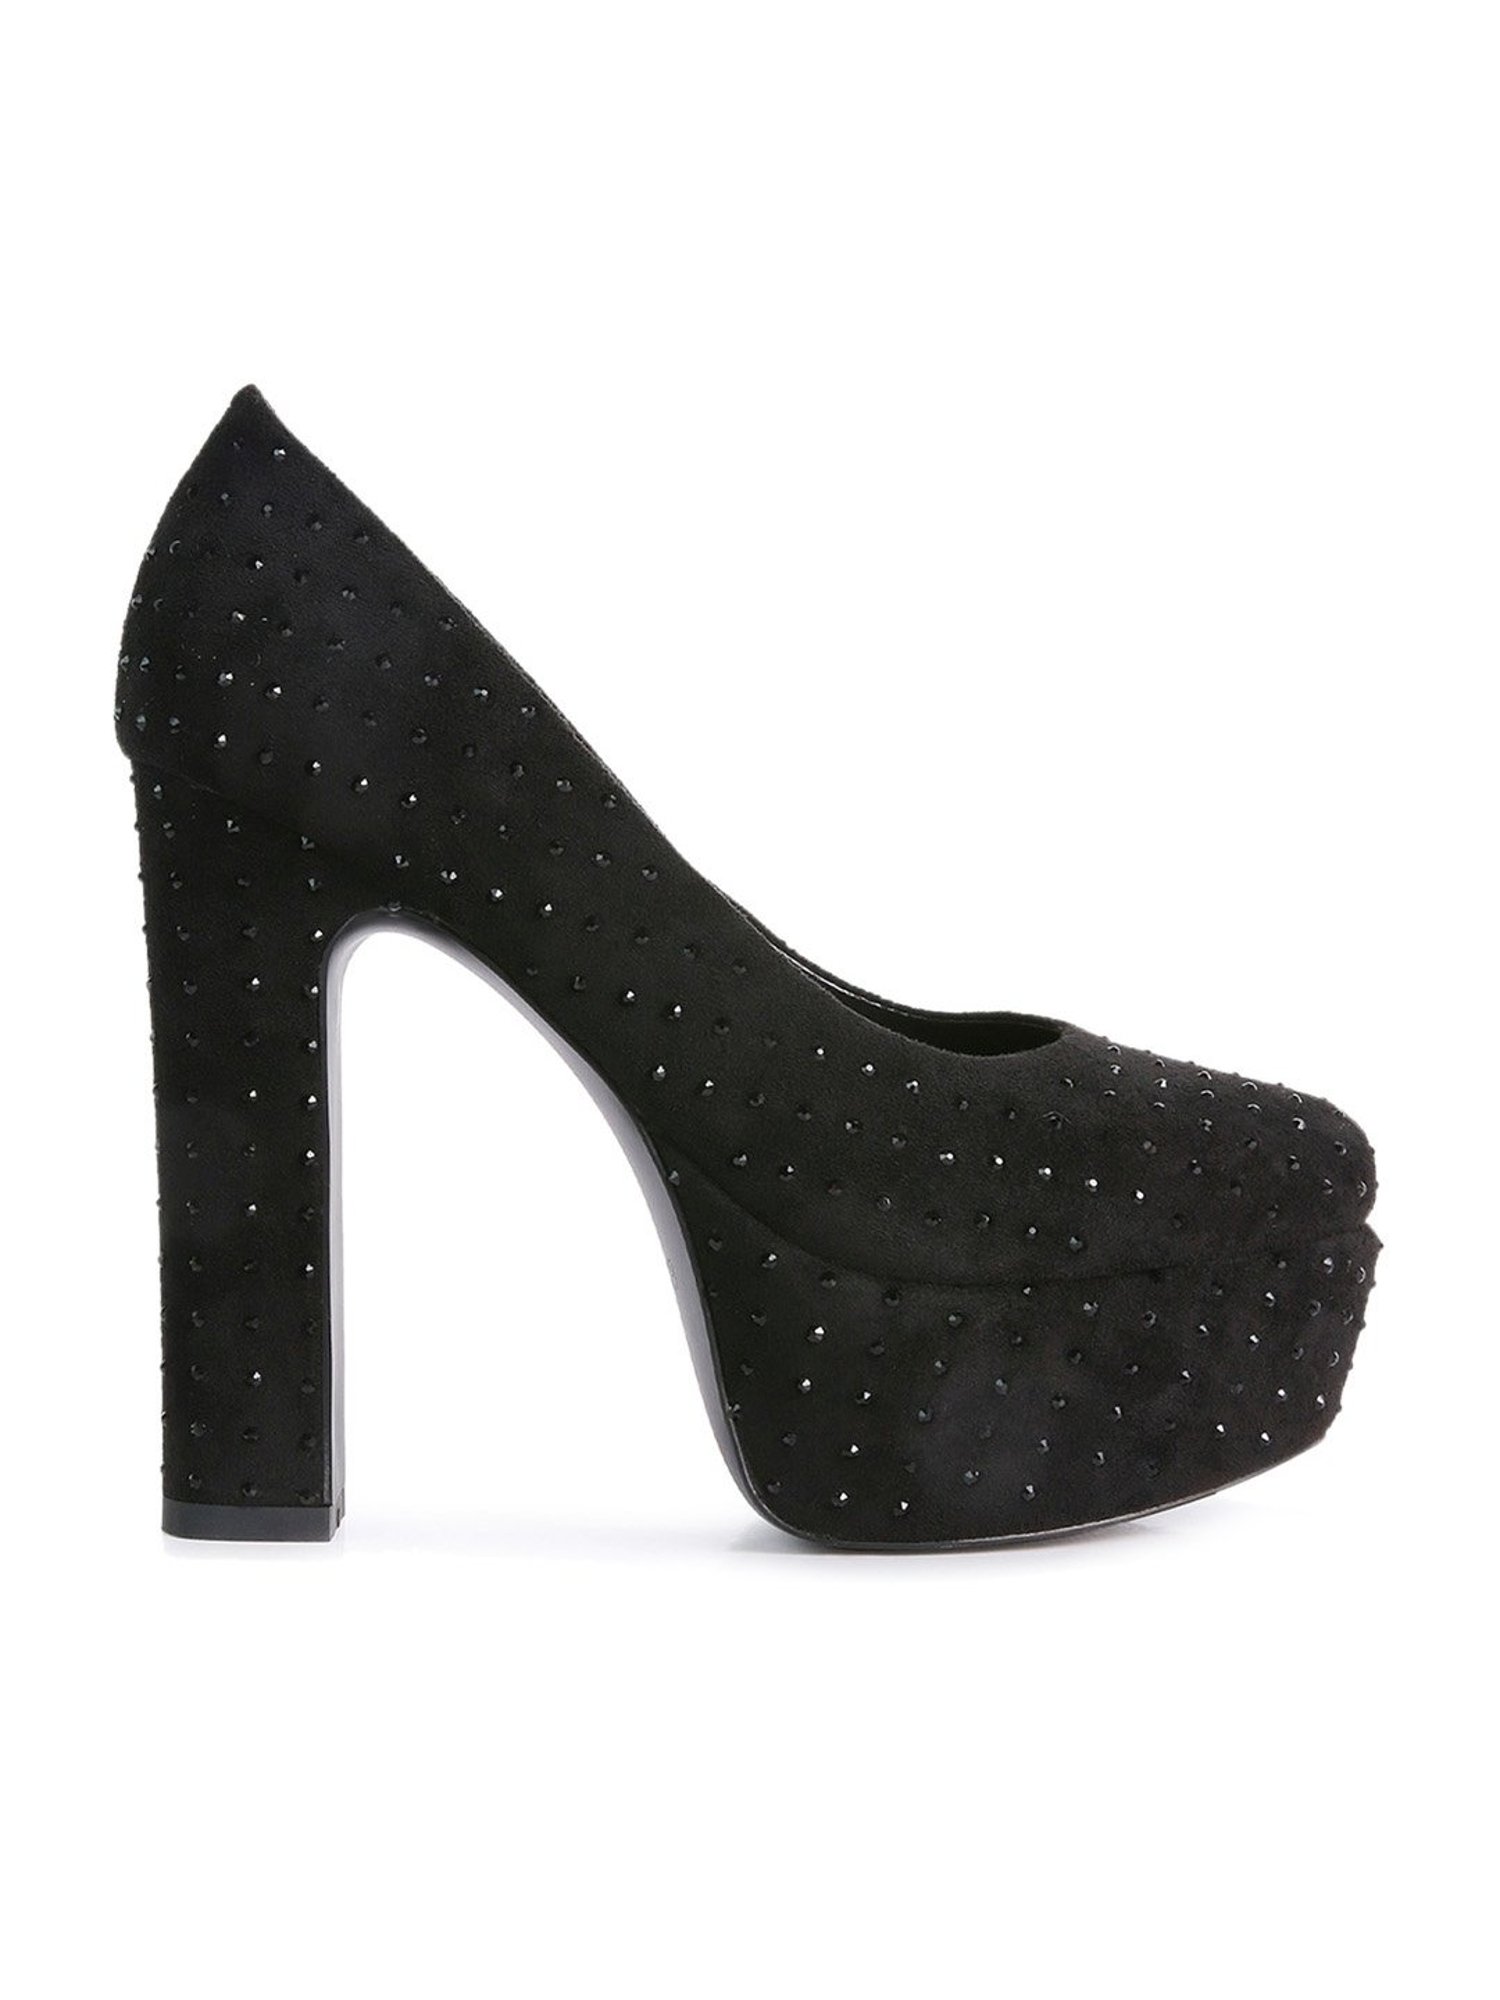 Best Clear Black Glitter Platform Heels | Heels, High heel shoes, Hot heels